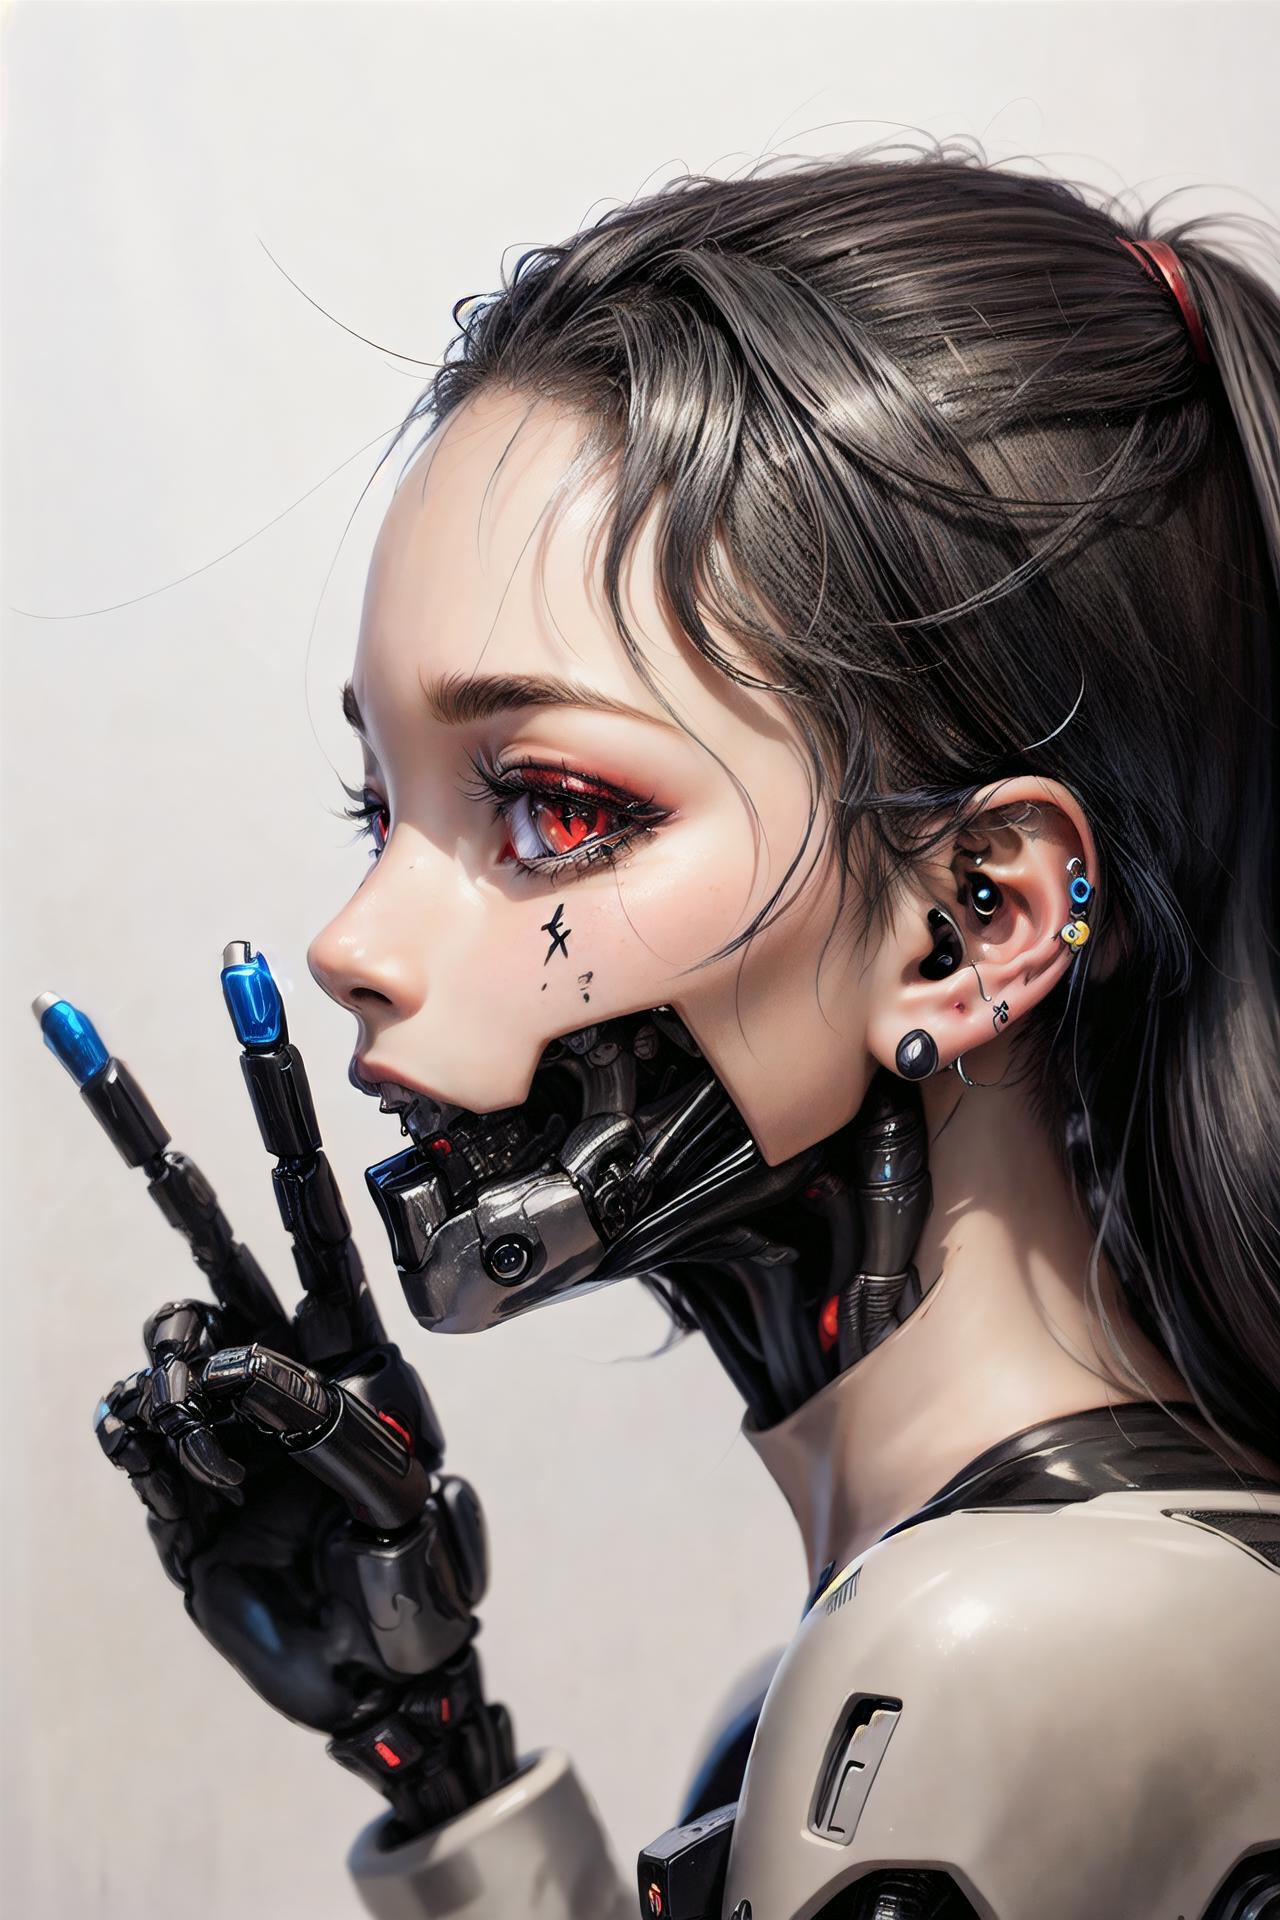 zyd232's Cybernetic Jawless LoRA | Cyberpunk | Body Modification image by shefchenko